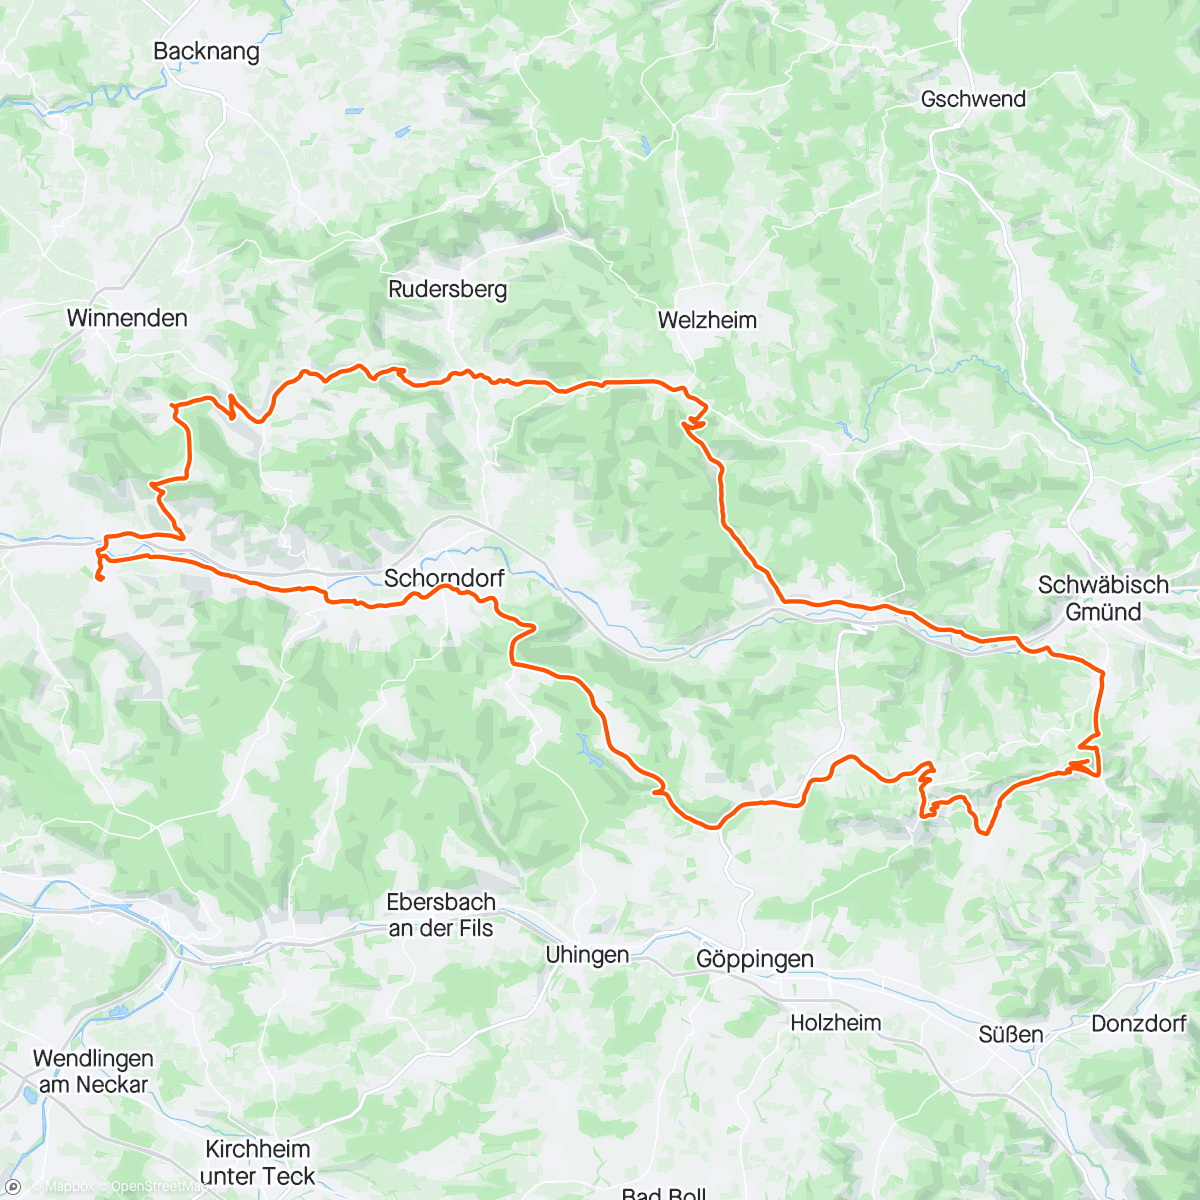 Mappa dell'attività Quäldich Schwobaländlefährtle em Remsdäle  🚴🏻🚴🏻🚴🏻🚴🏻💪 erschde Etabbe